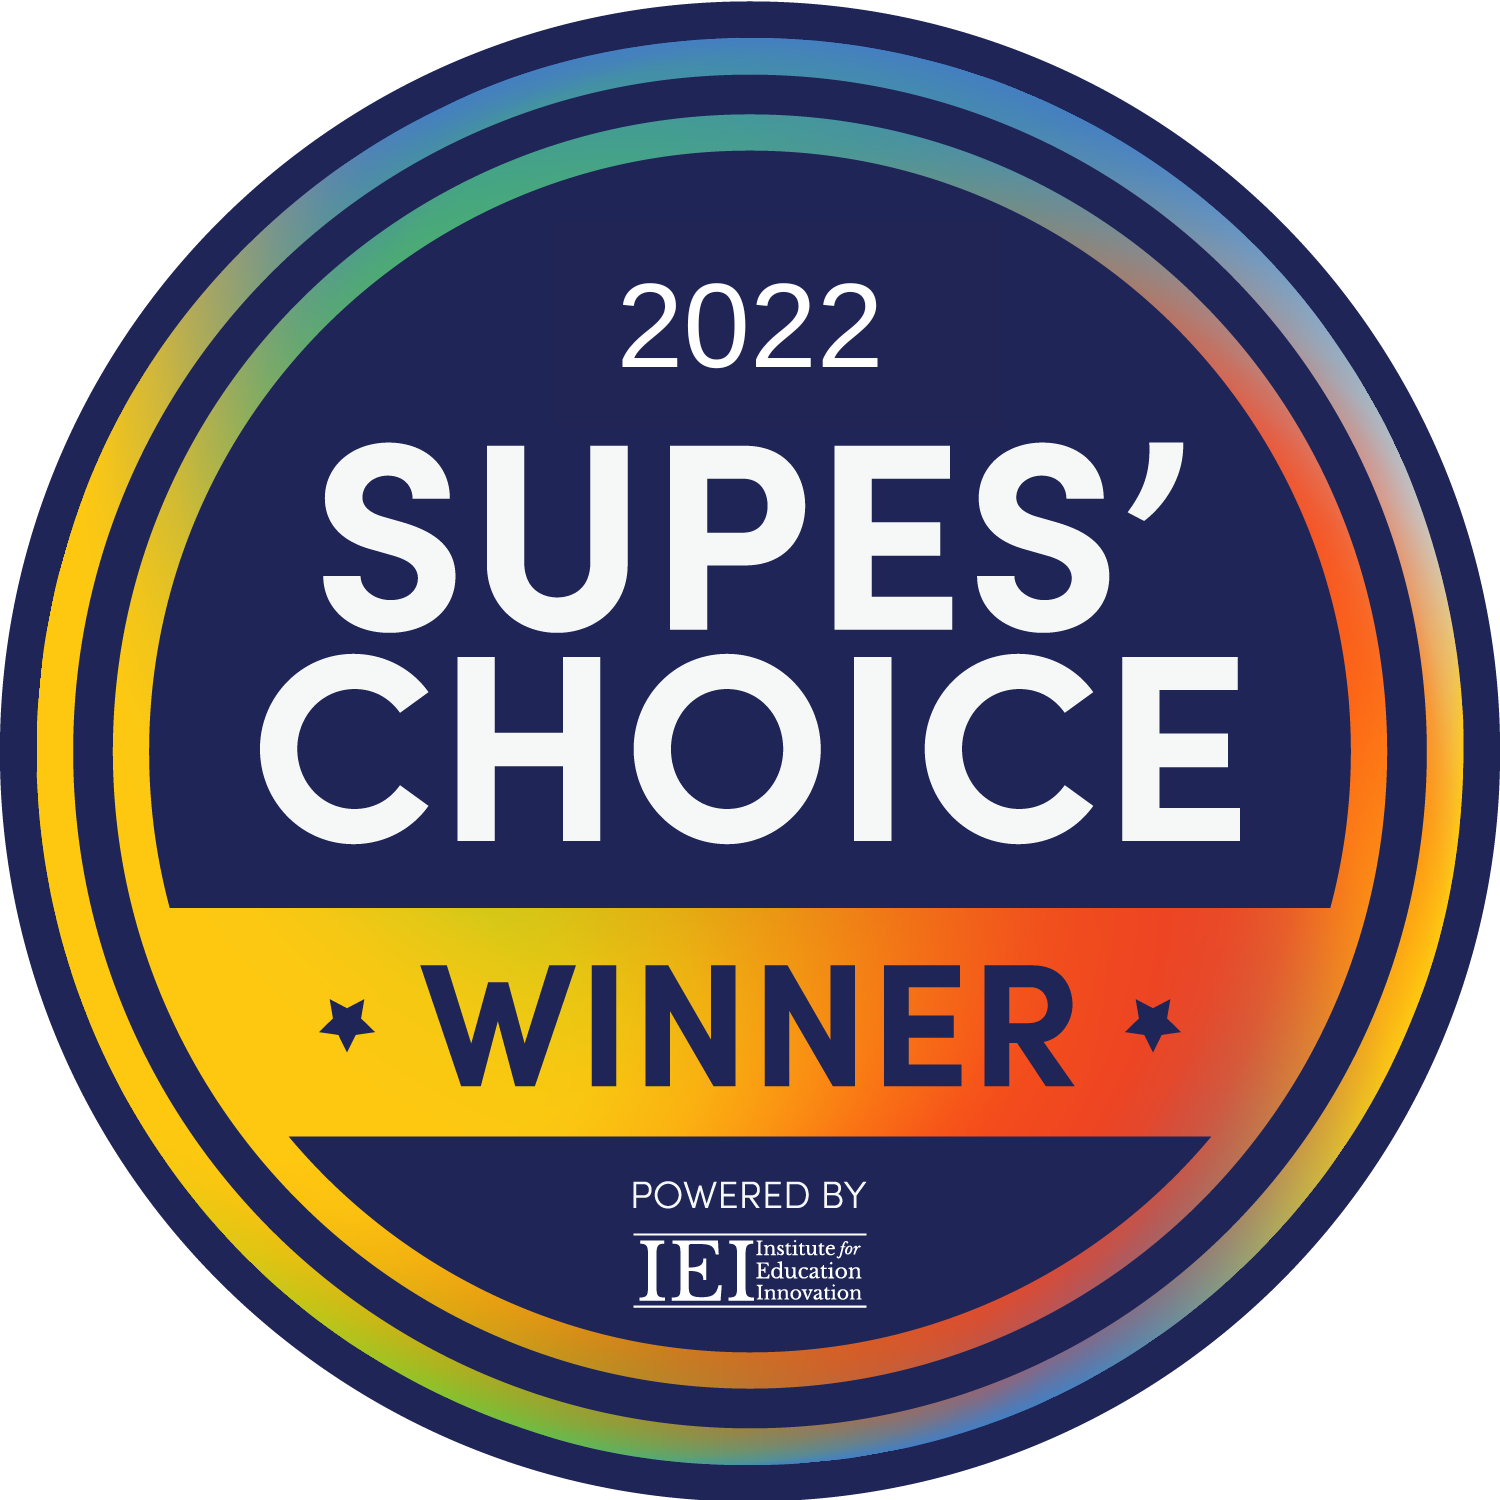 2022 Supes Choice Winner Badge